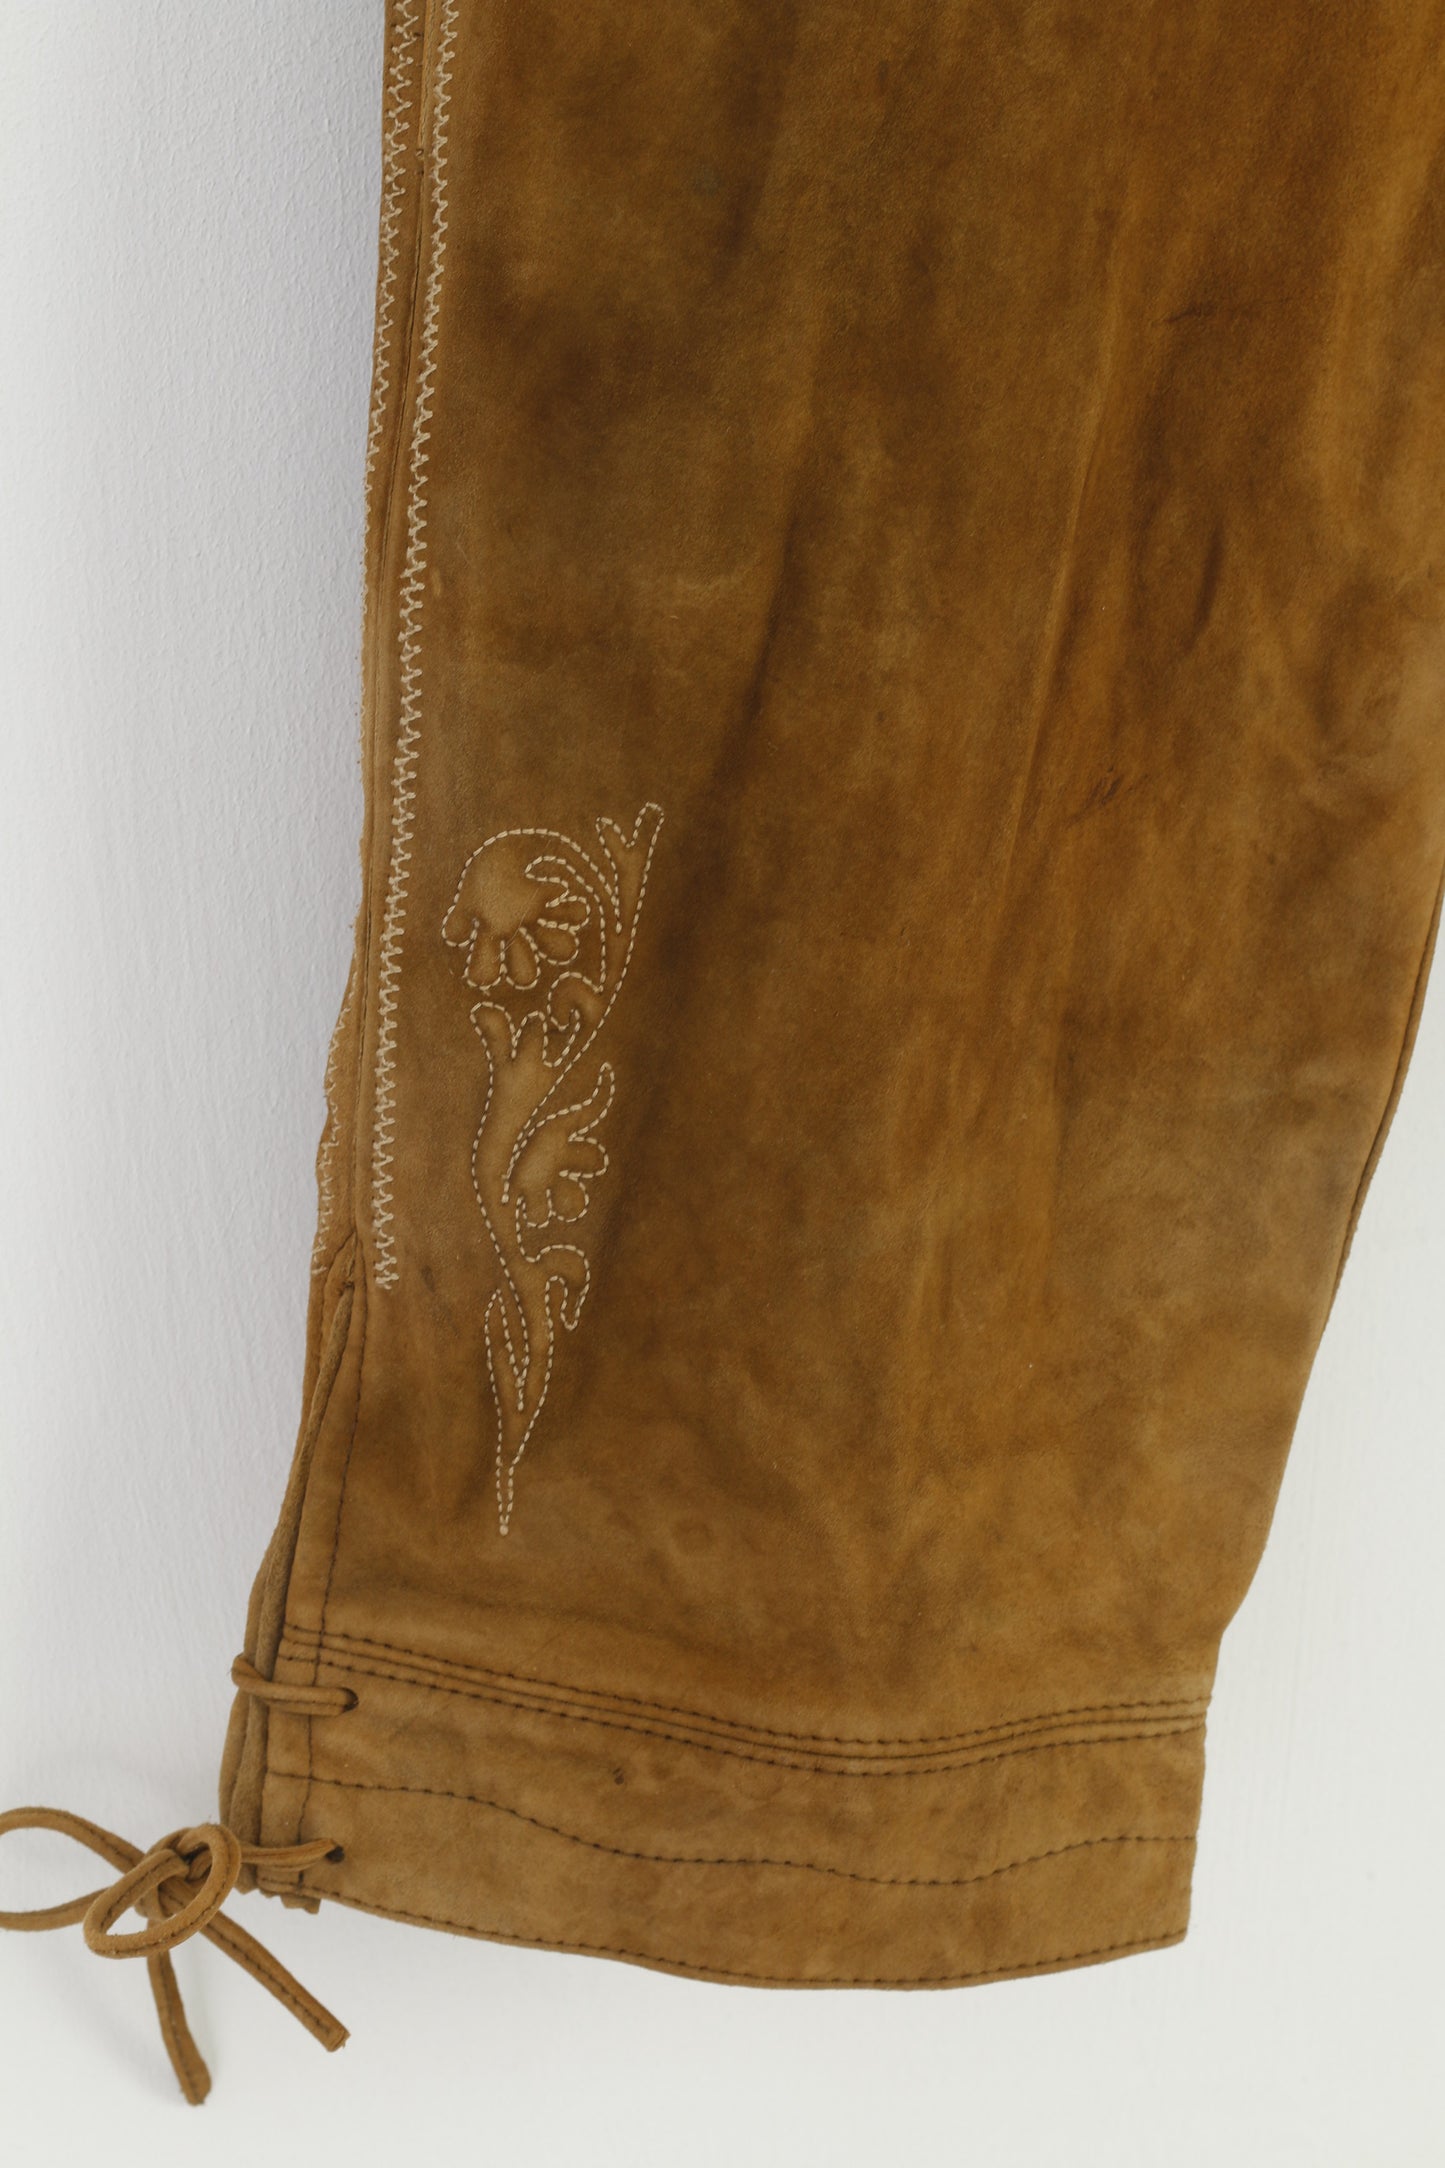 Marjo Uomo 50 Pantaloni in pelle Marrone Vintage Tirolo Austria Trachten Western Cowboy Tradizionali tasche con fondo ricamato